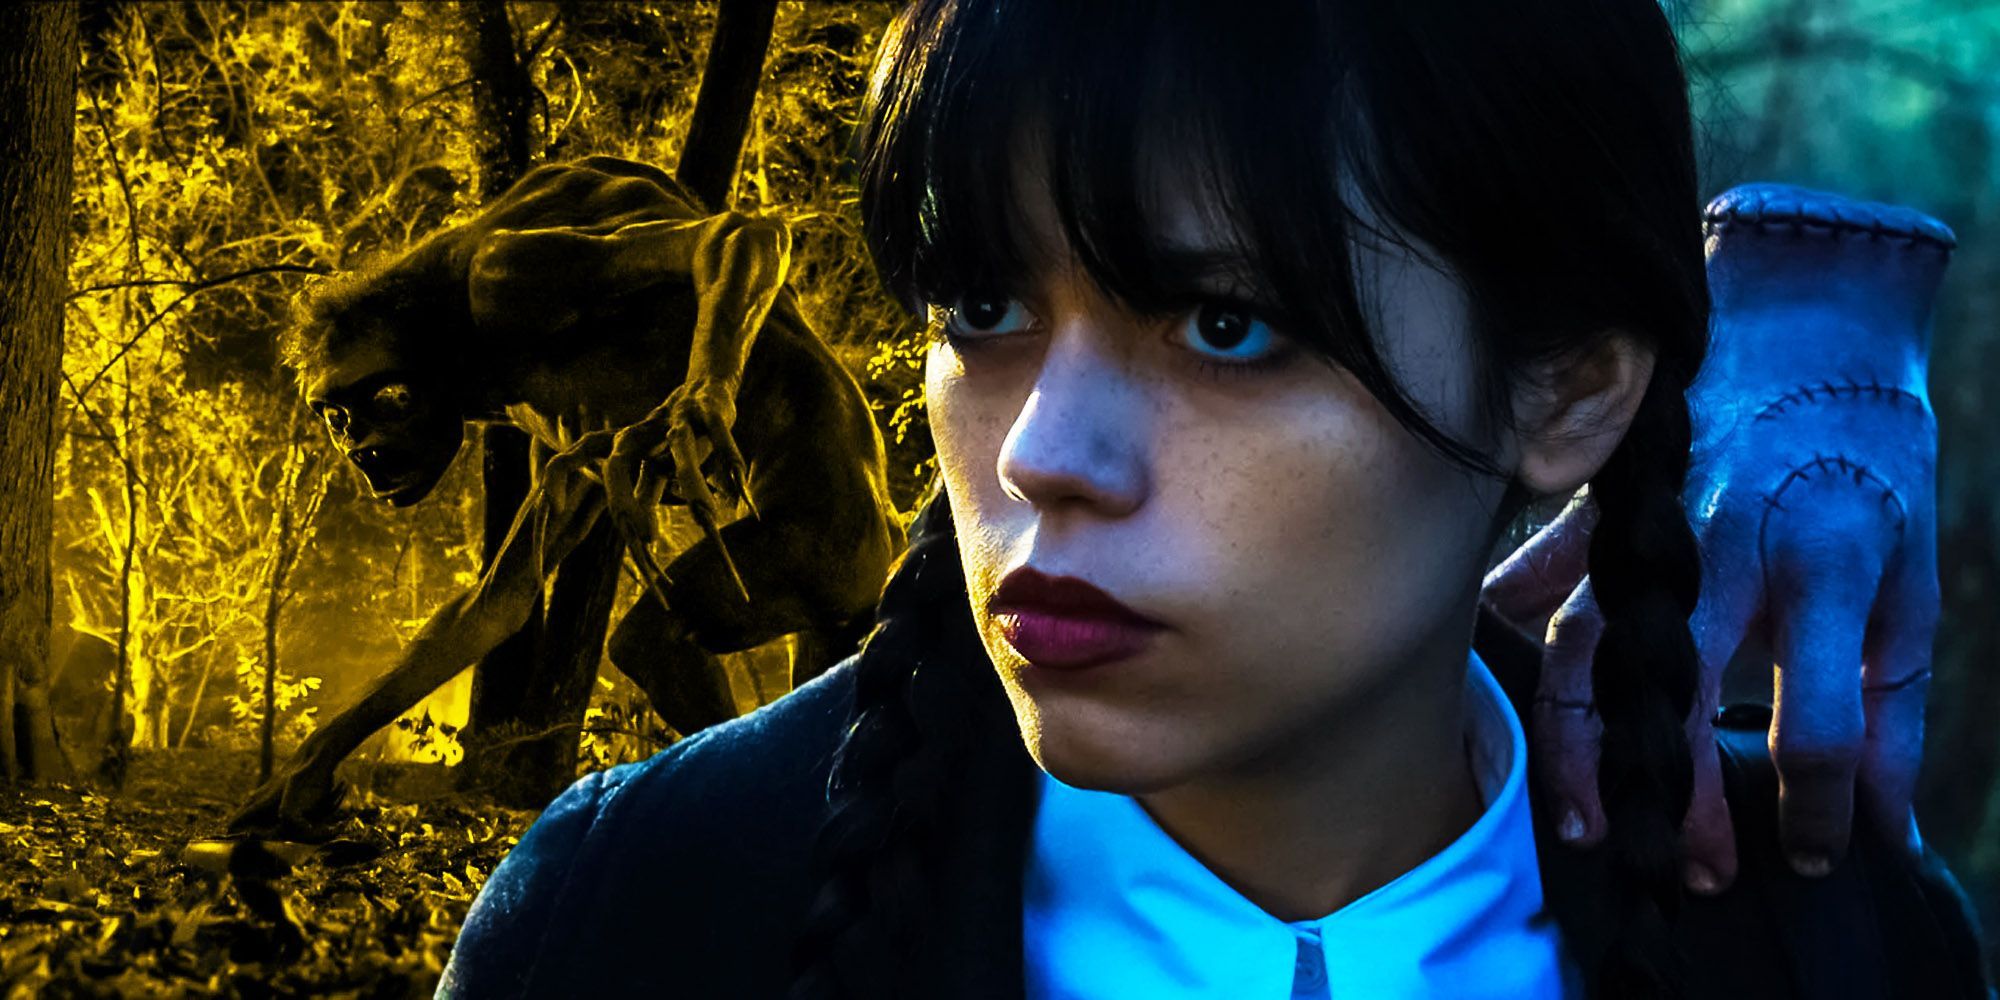 Wednesday: Jenna Ortega and the Hyde Monster